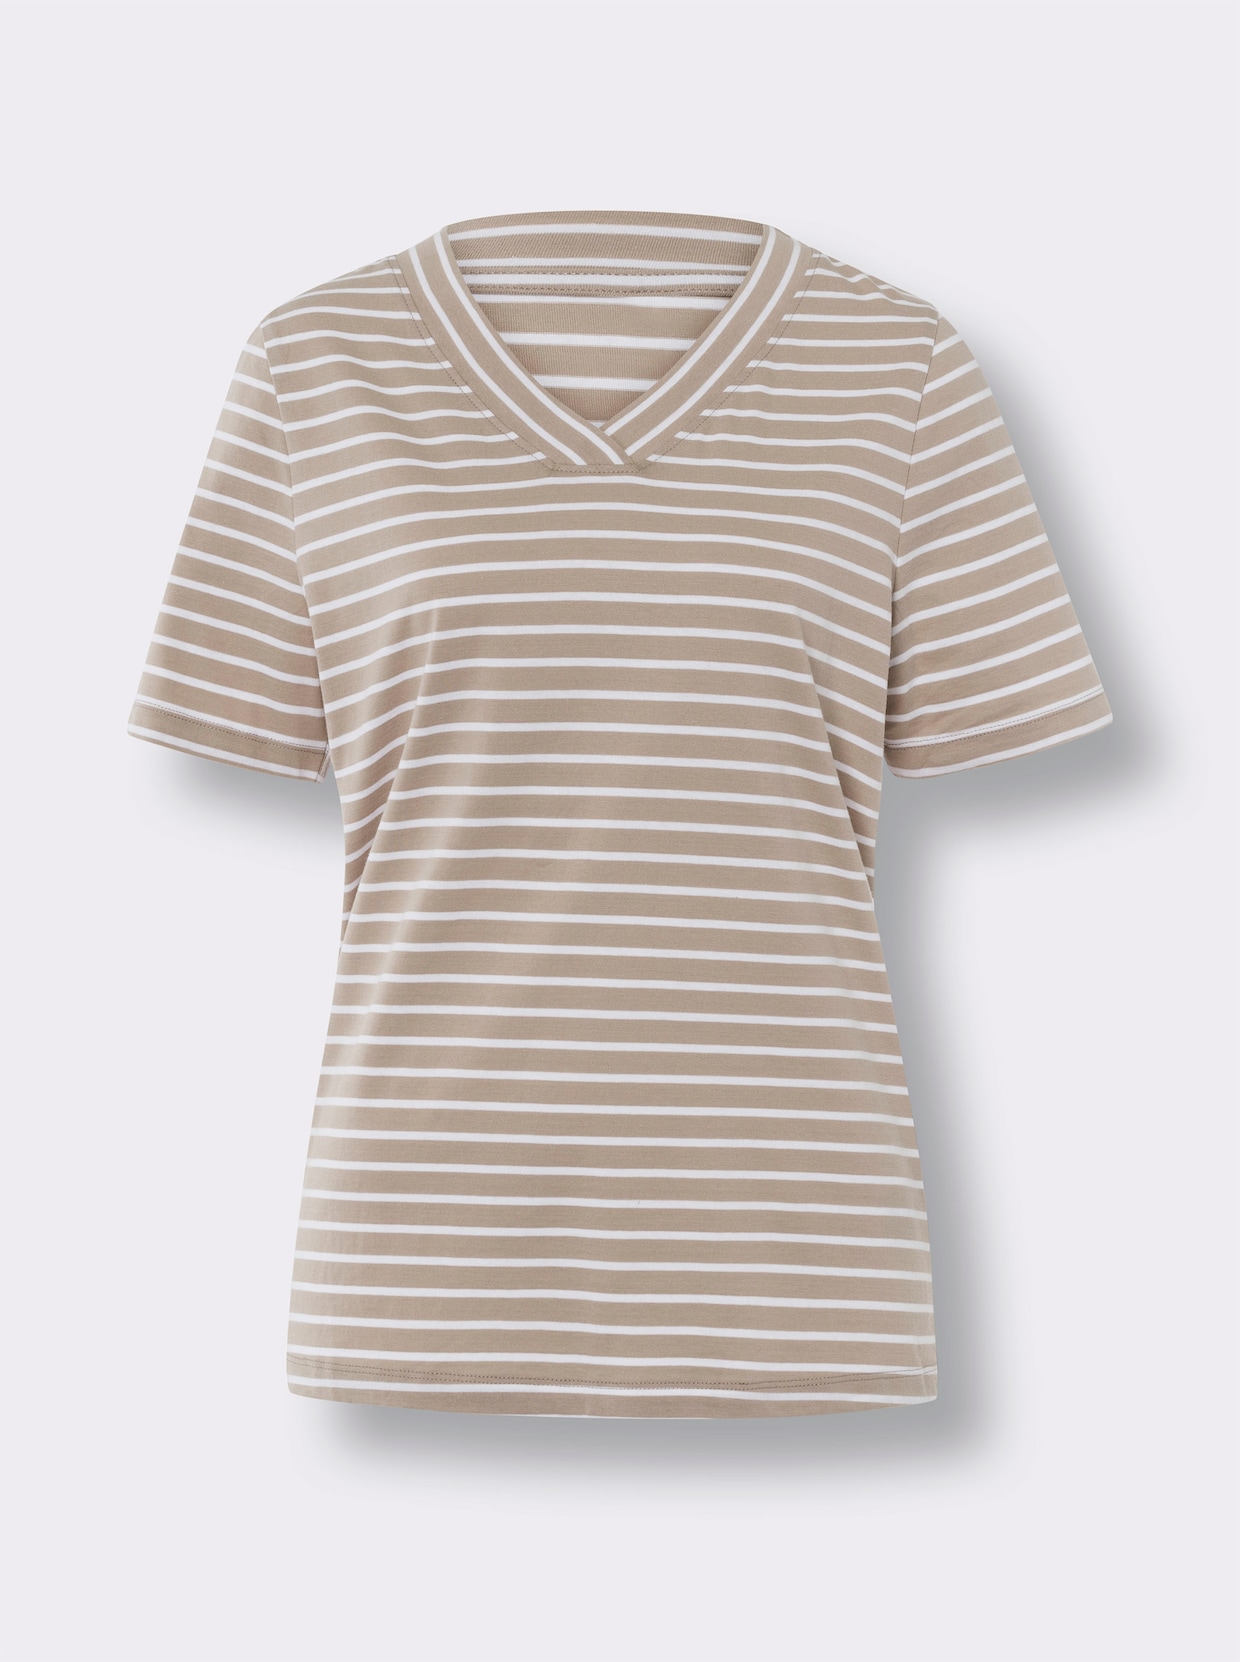 Tričko s krátkymi rukávmi - Béžová-ecru zafarbeniu krému-pruhované